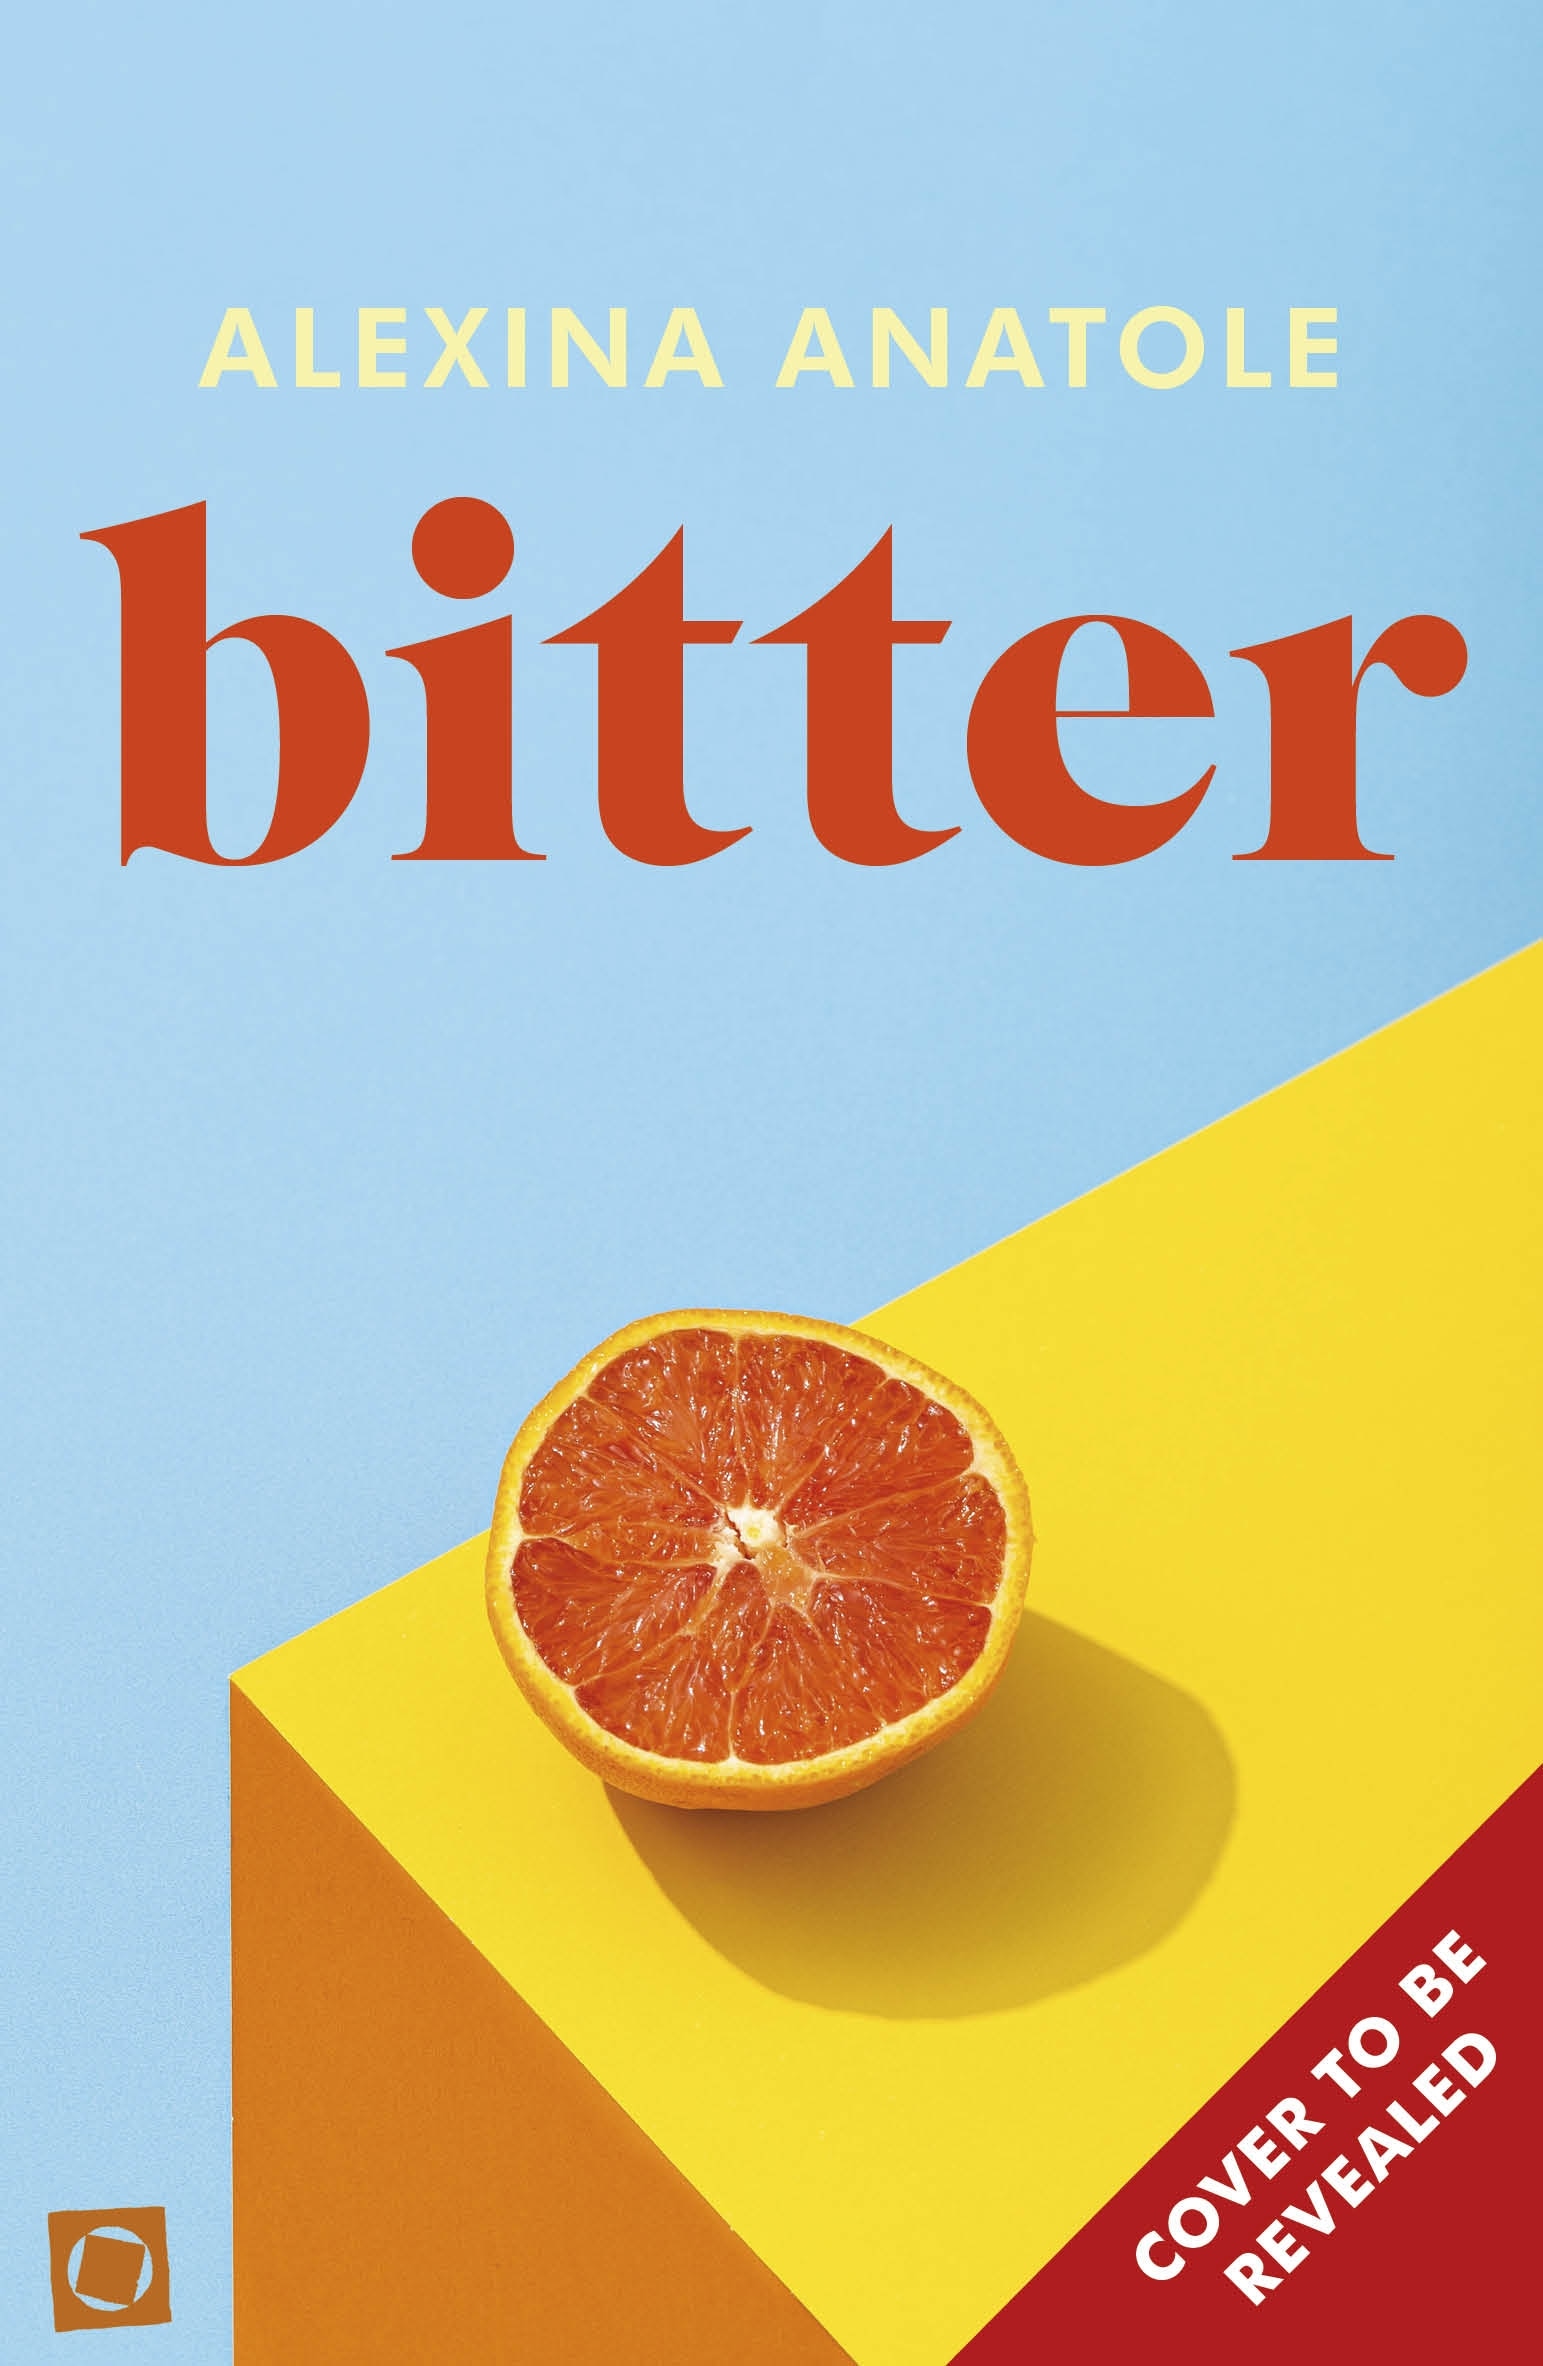 Book “Bitter” by Alexina Anatole — September 1, 2022